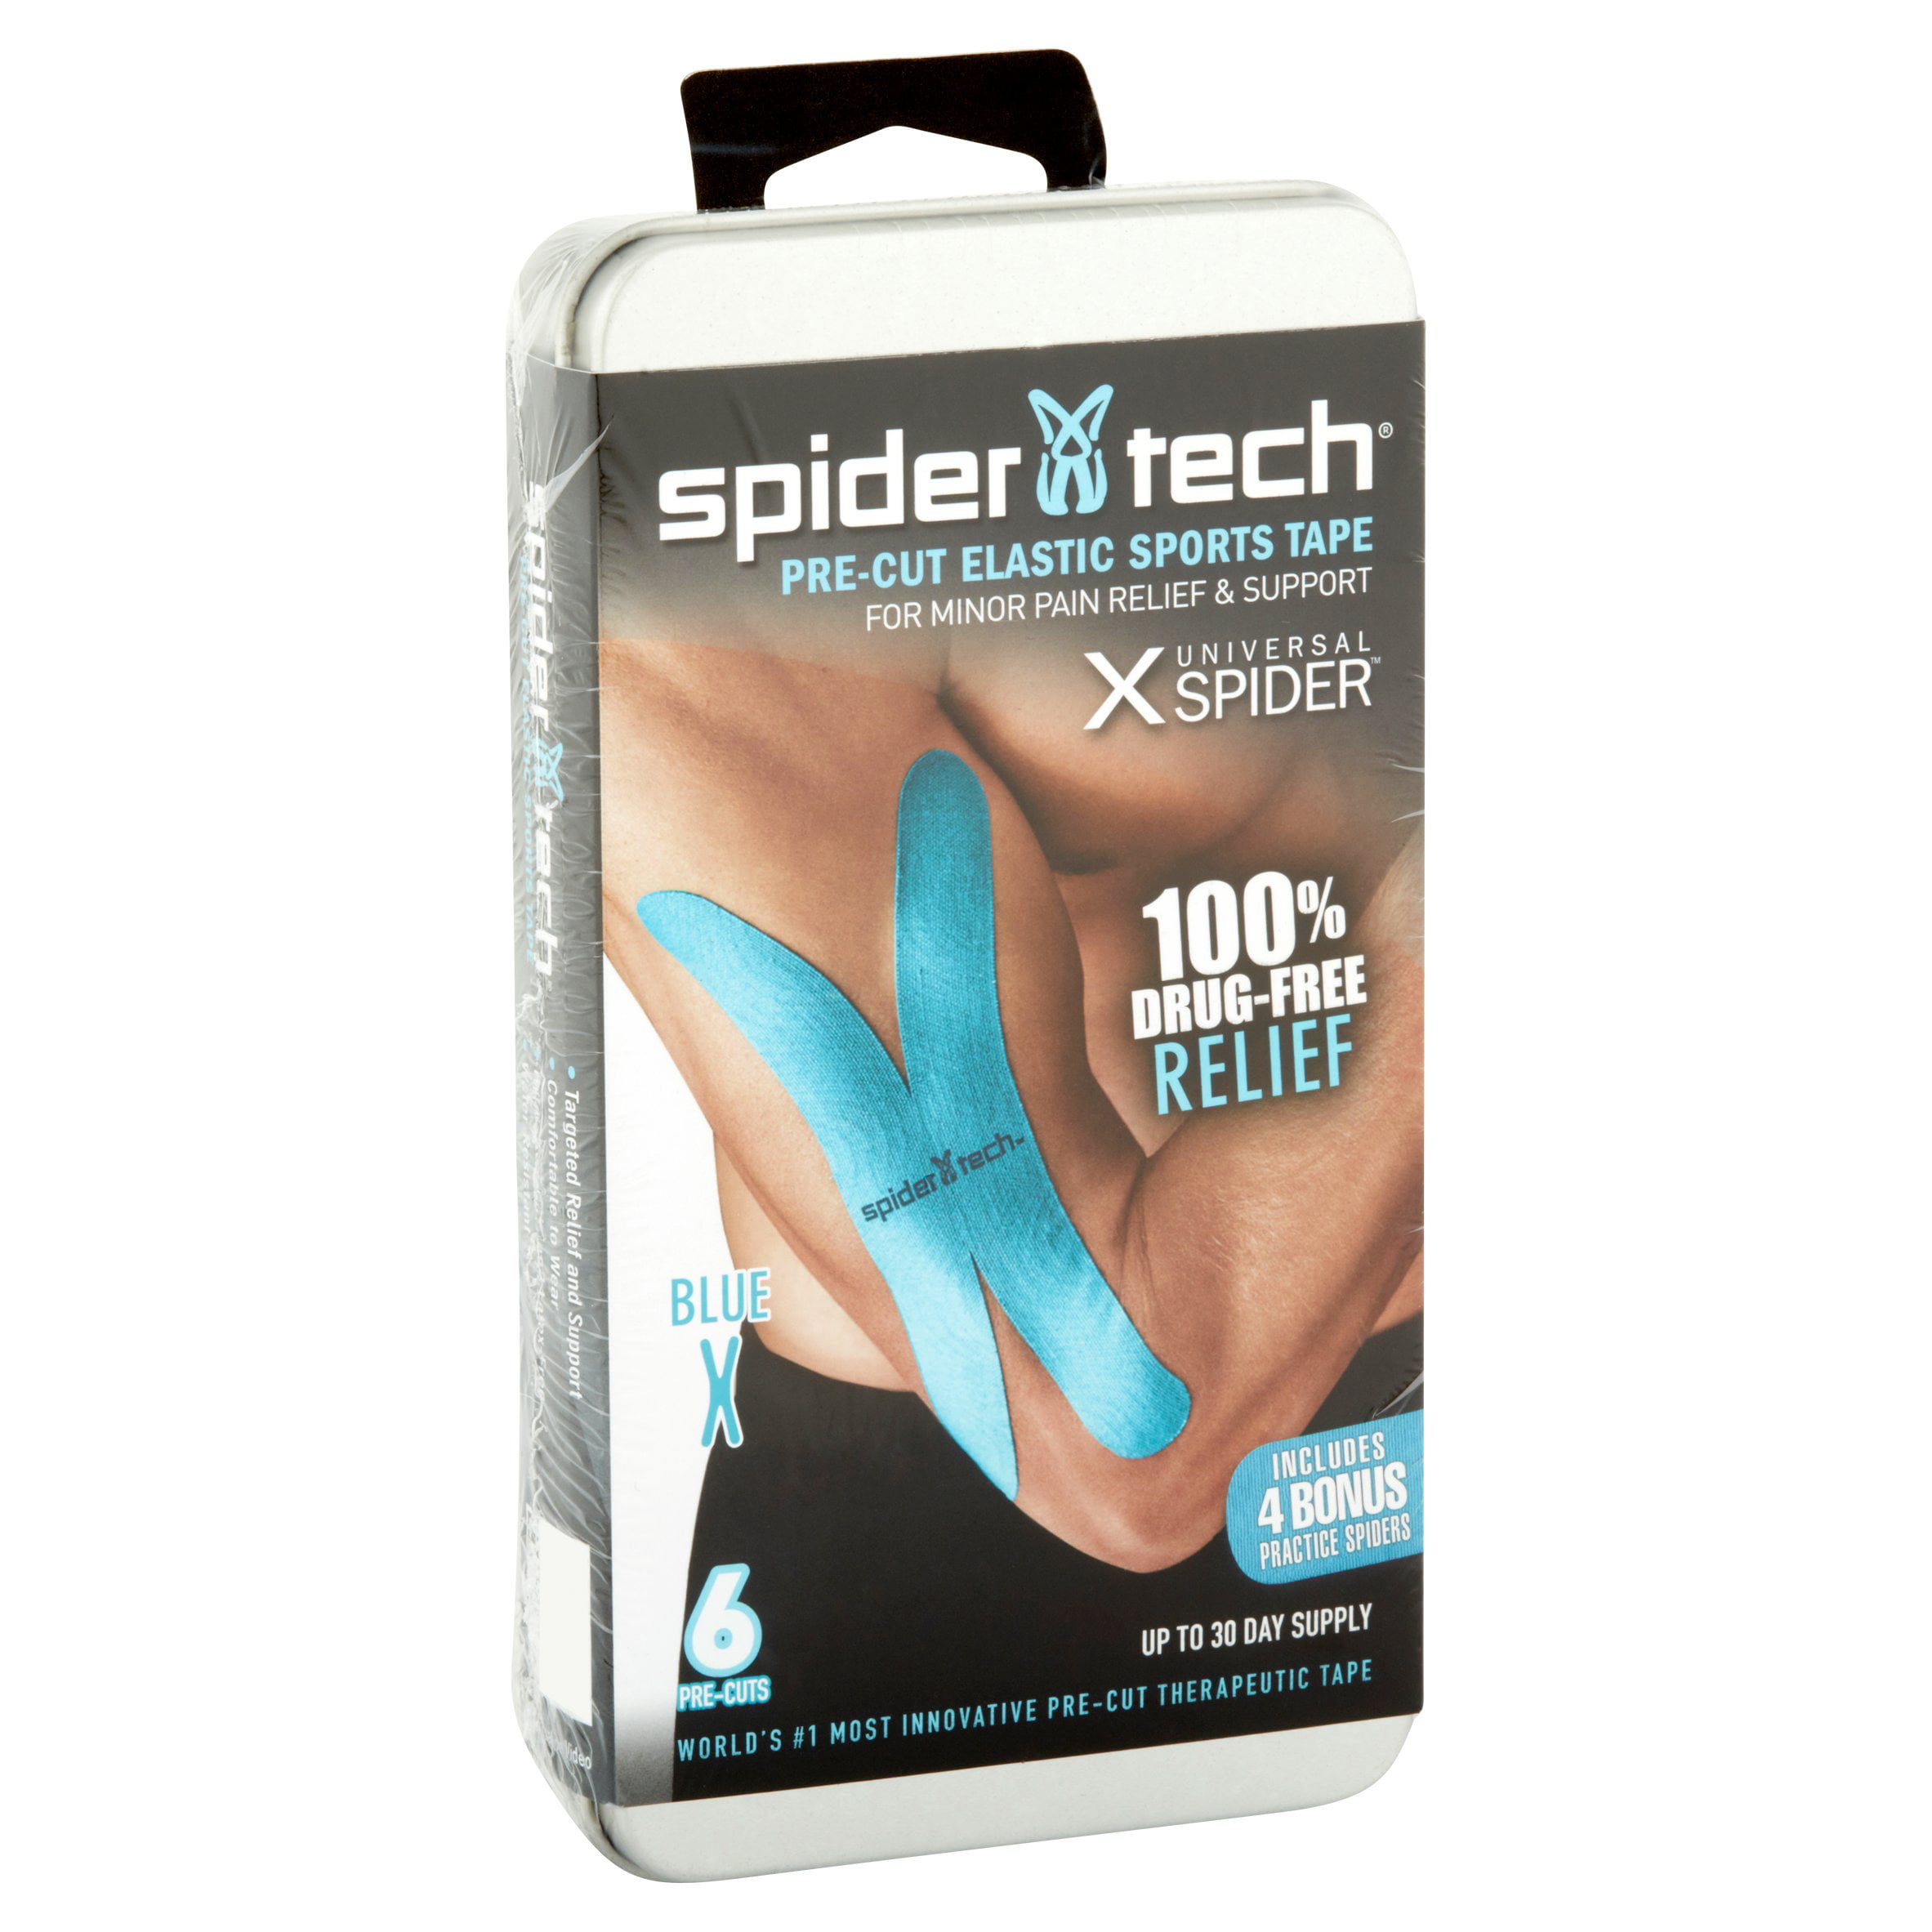 SpiderTech X Universal Spider Blue Pre-Cut Elastic Sports Tape, 6 count -  Walmart.com